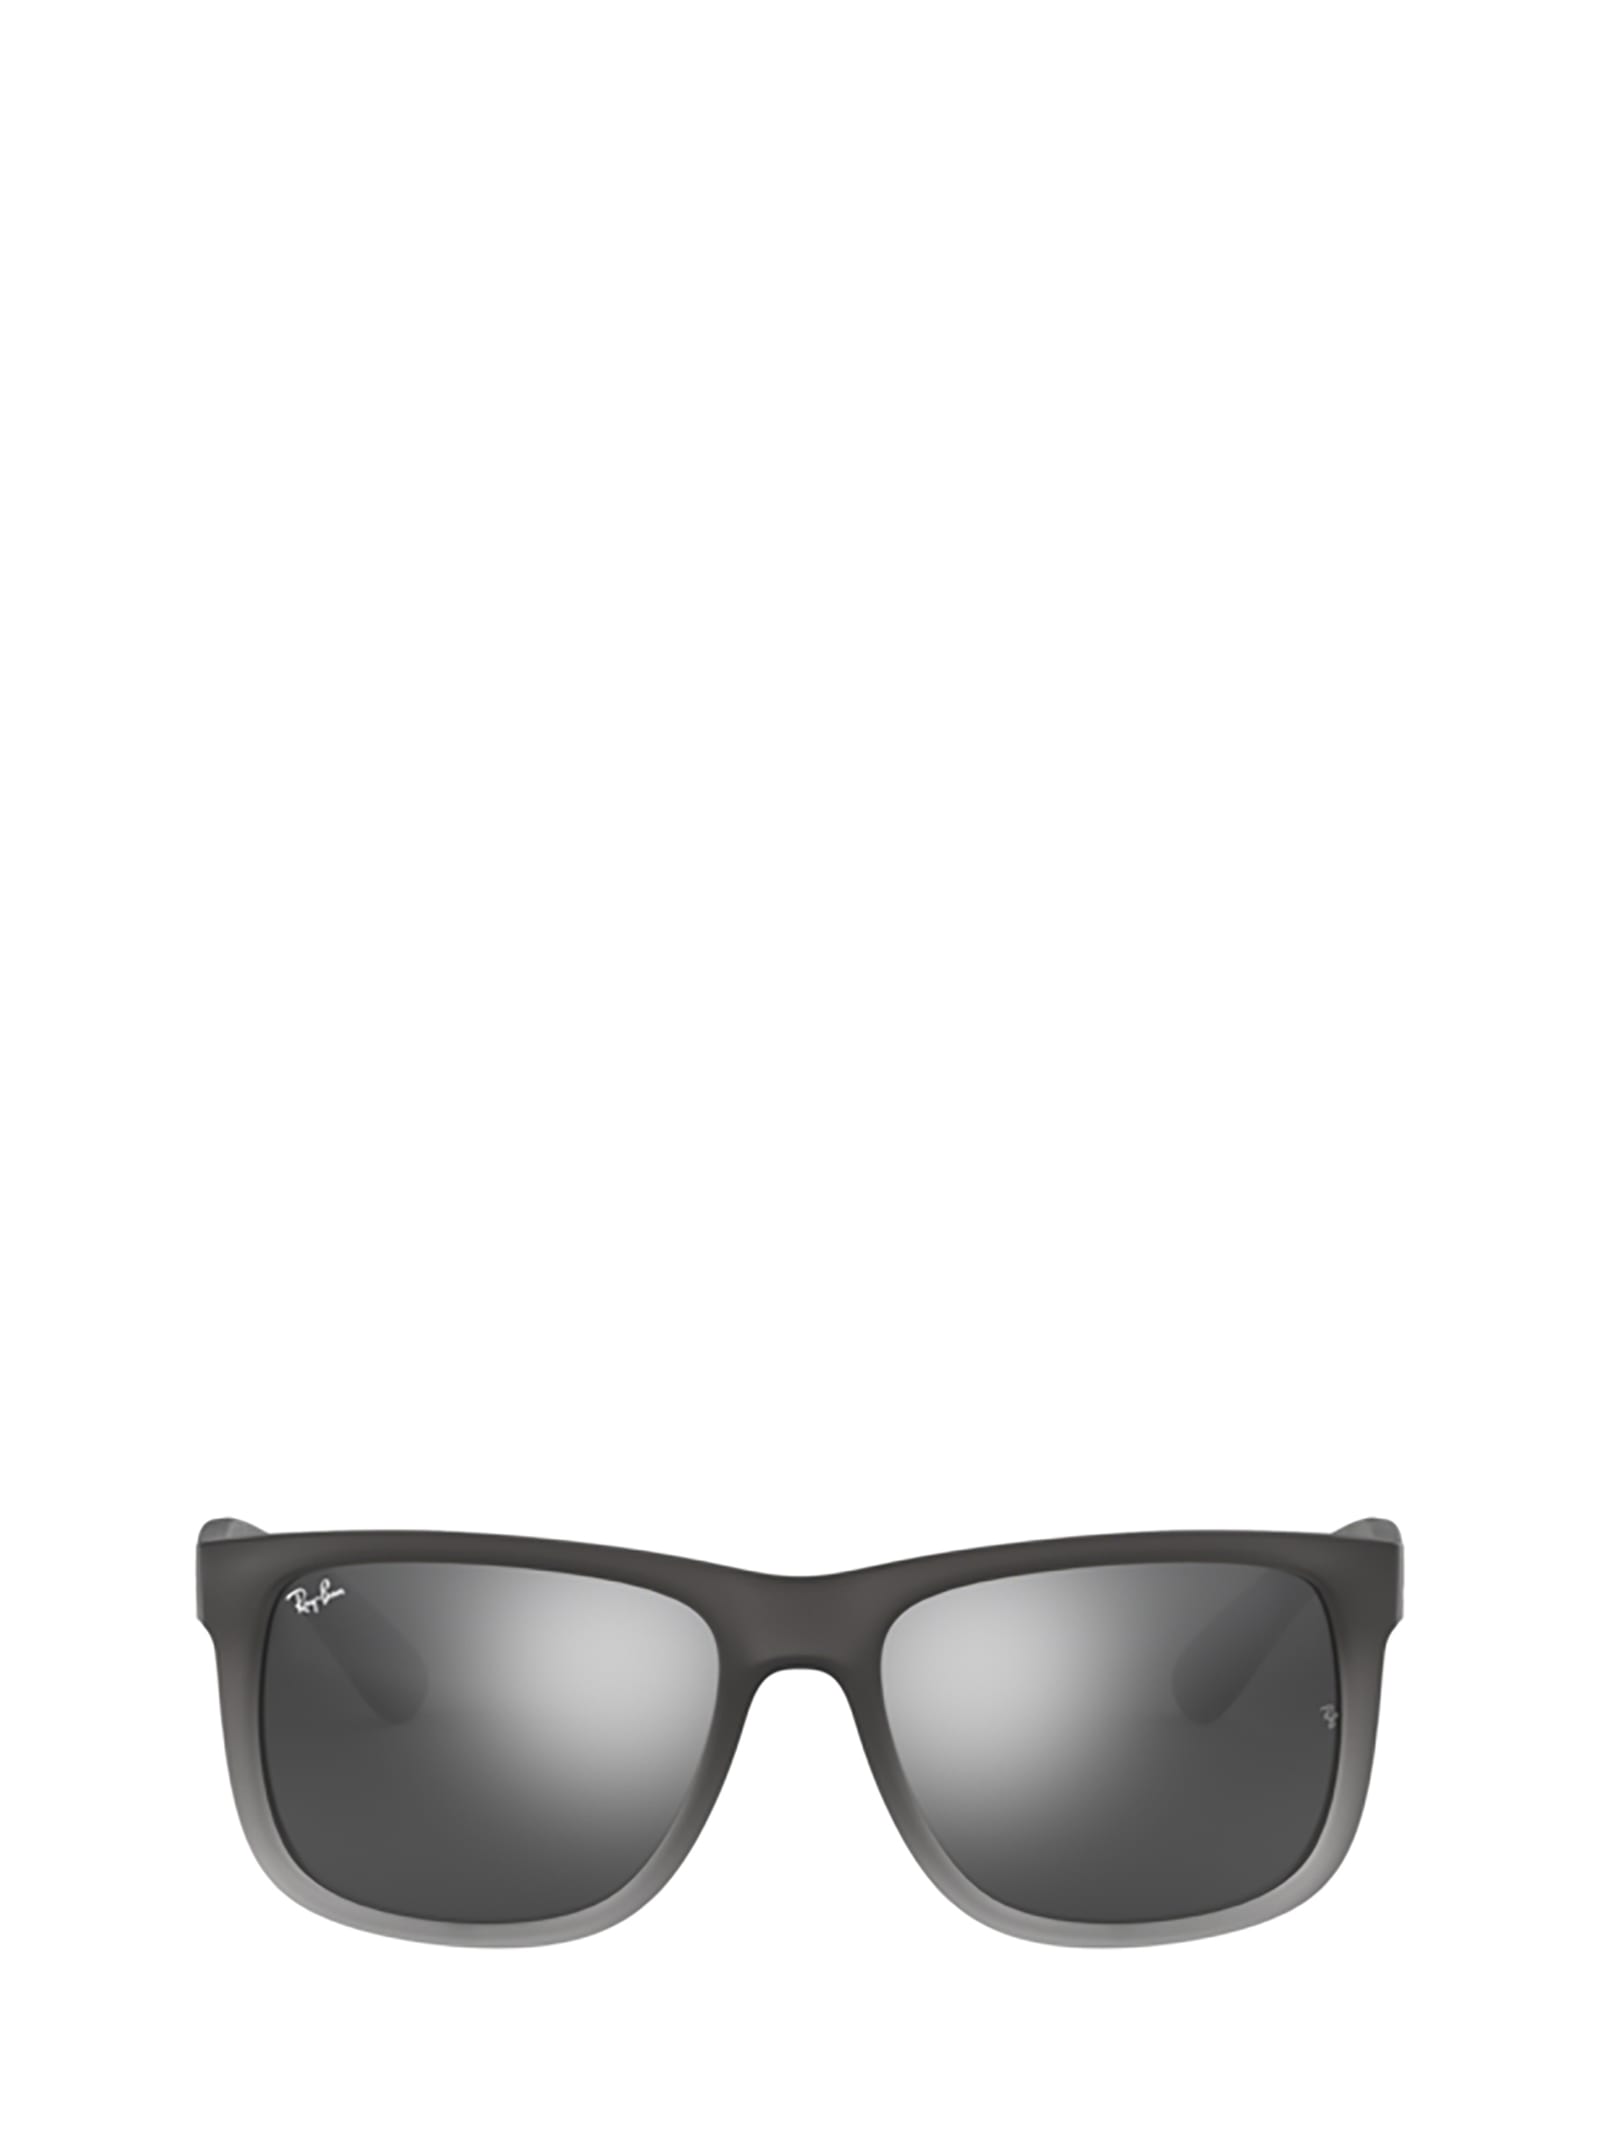 Ray-Ban Ray-ban Rb4165 Rubber Grey/grey Transp. Sunglasses